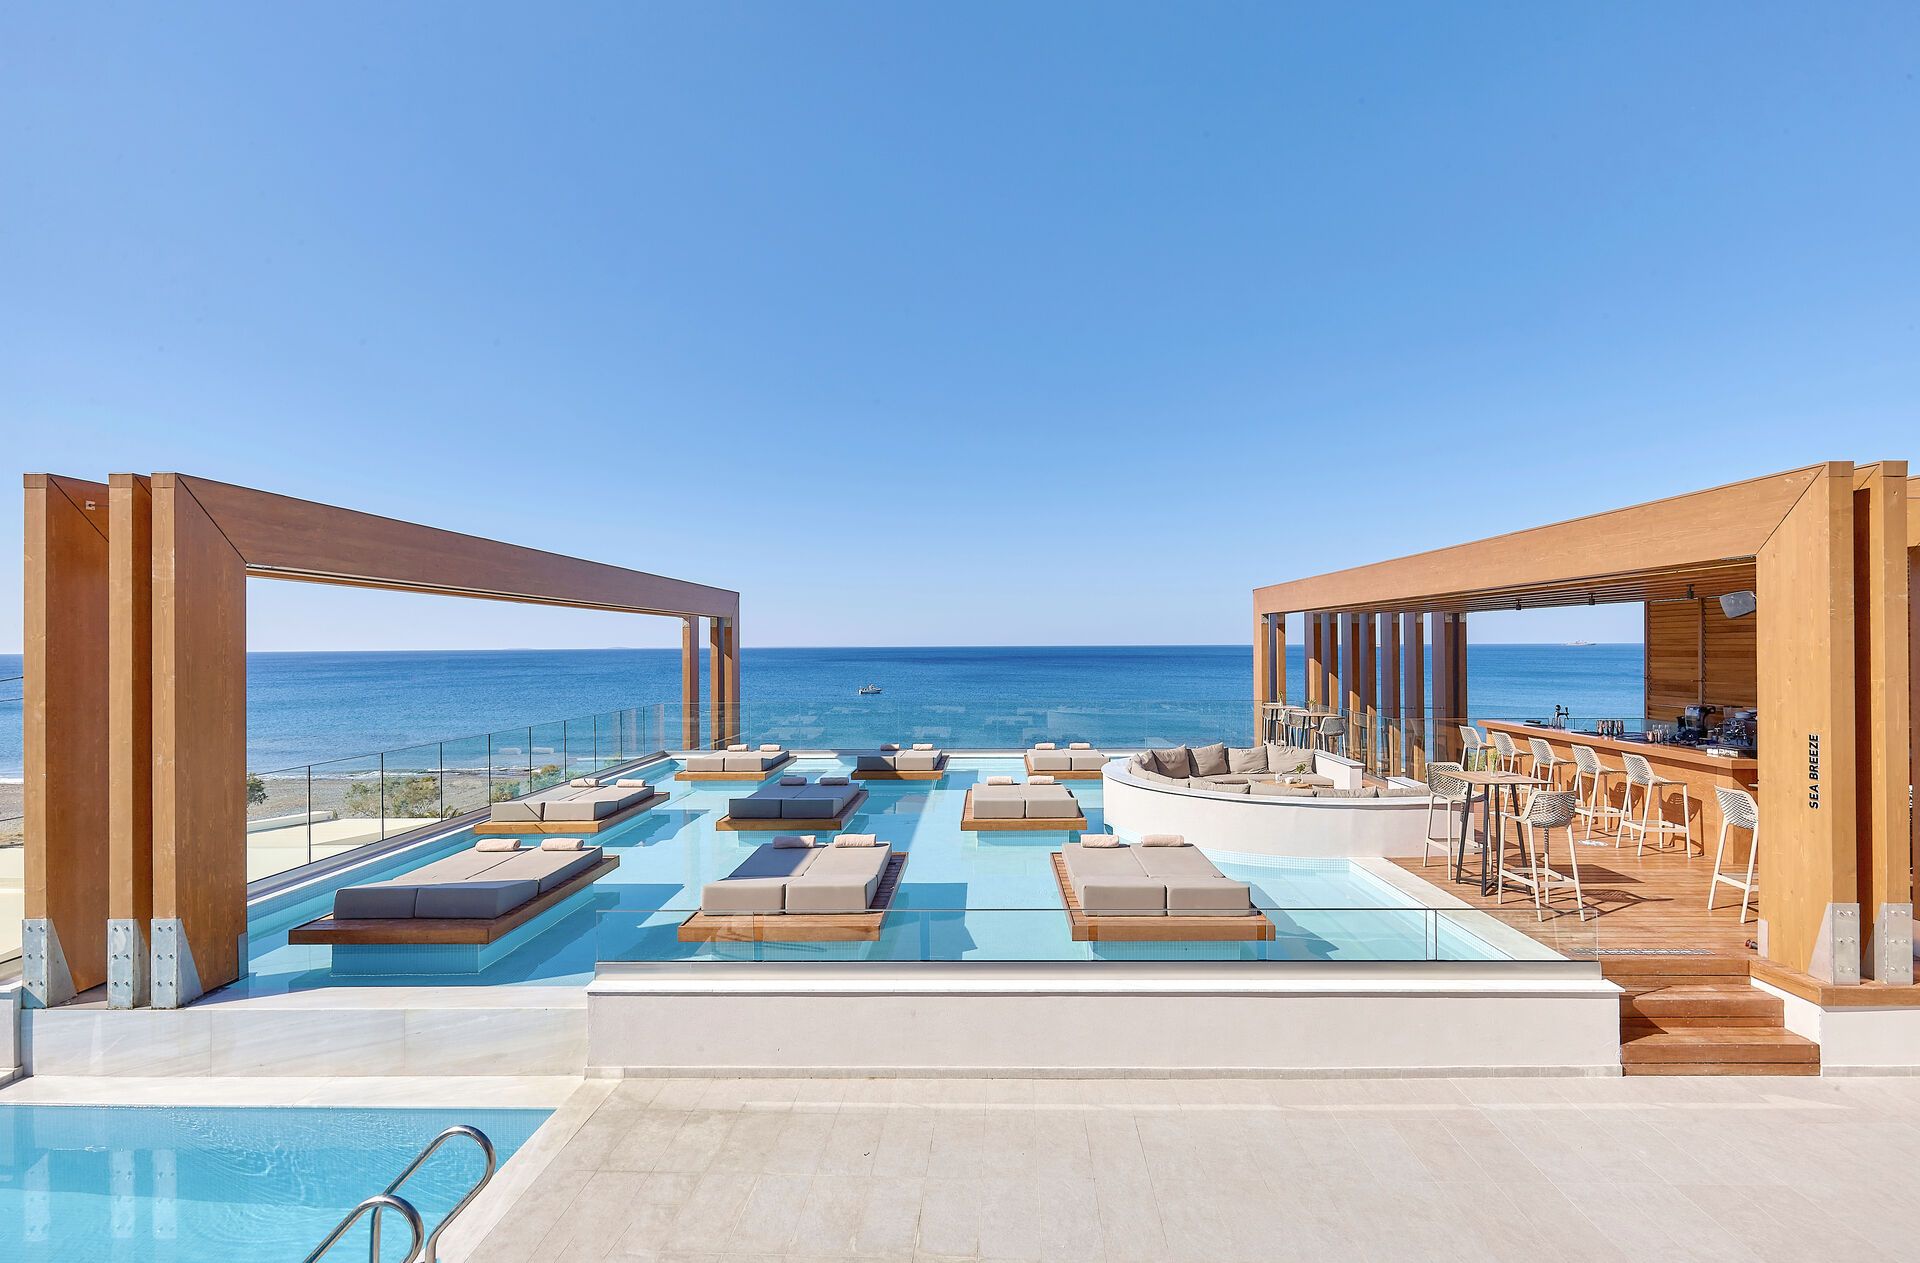 Crète - Ierapetra - Grèce - Iles grecques - Hotel Enorme Santanna Beach 4*